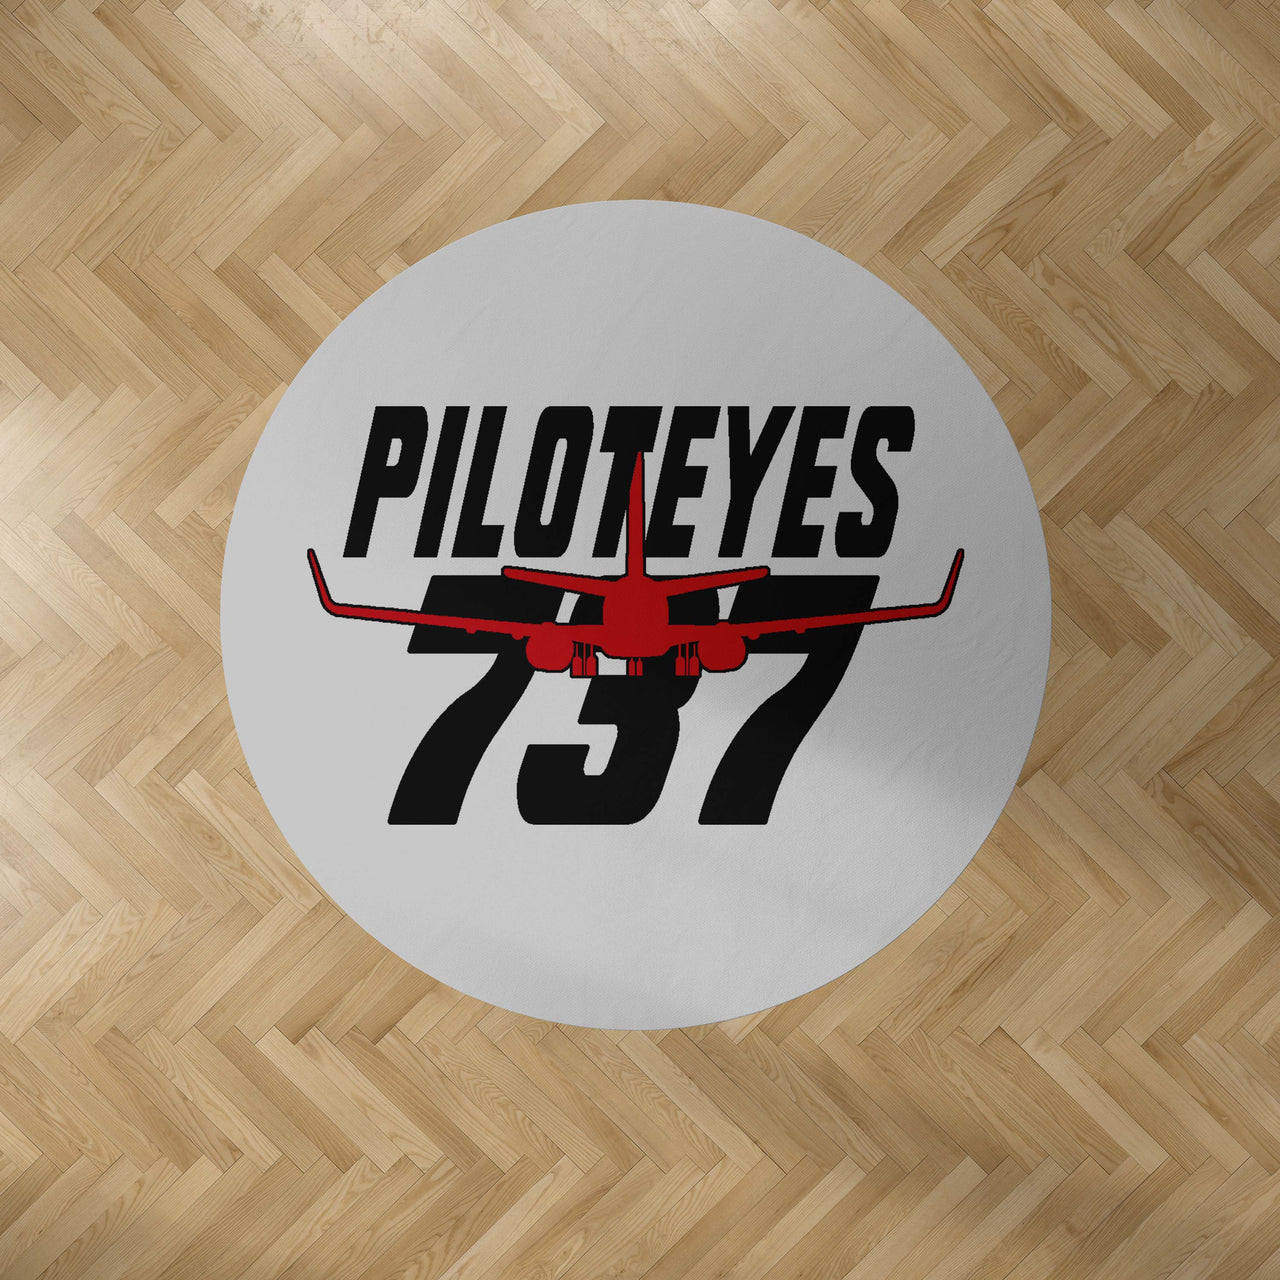 Amazing Piloteyes737 Designed Carpet & Floor Mats (Round)